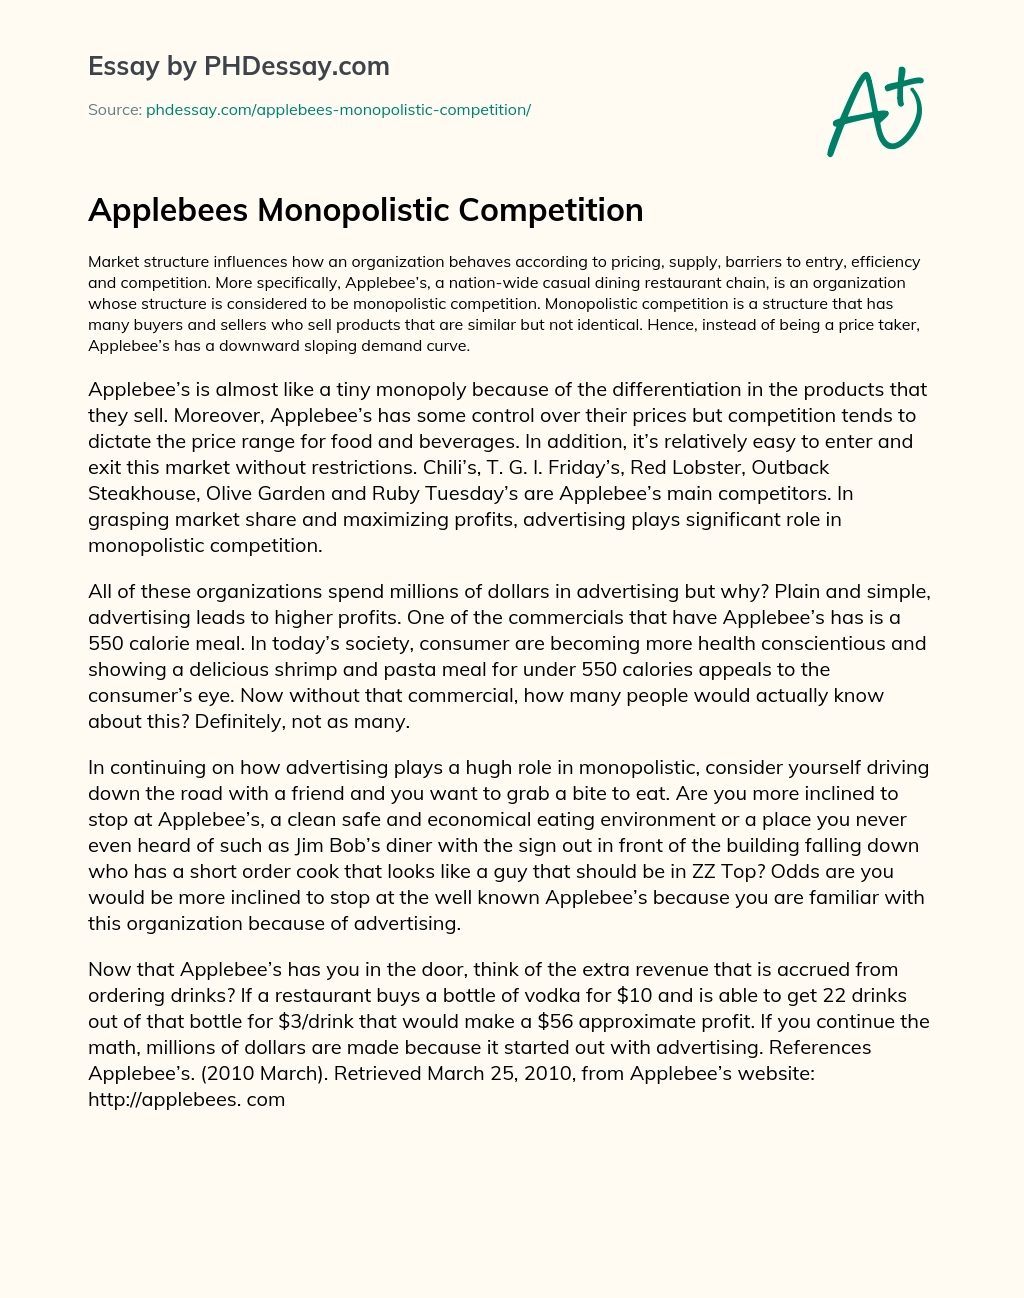 Applebees Monopolistic Competition essay